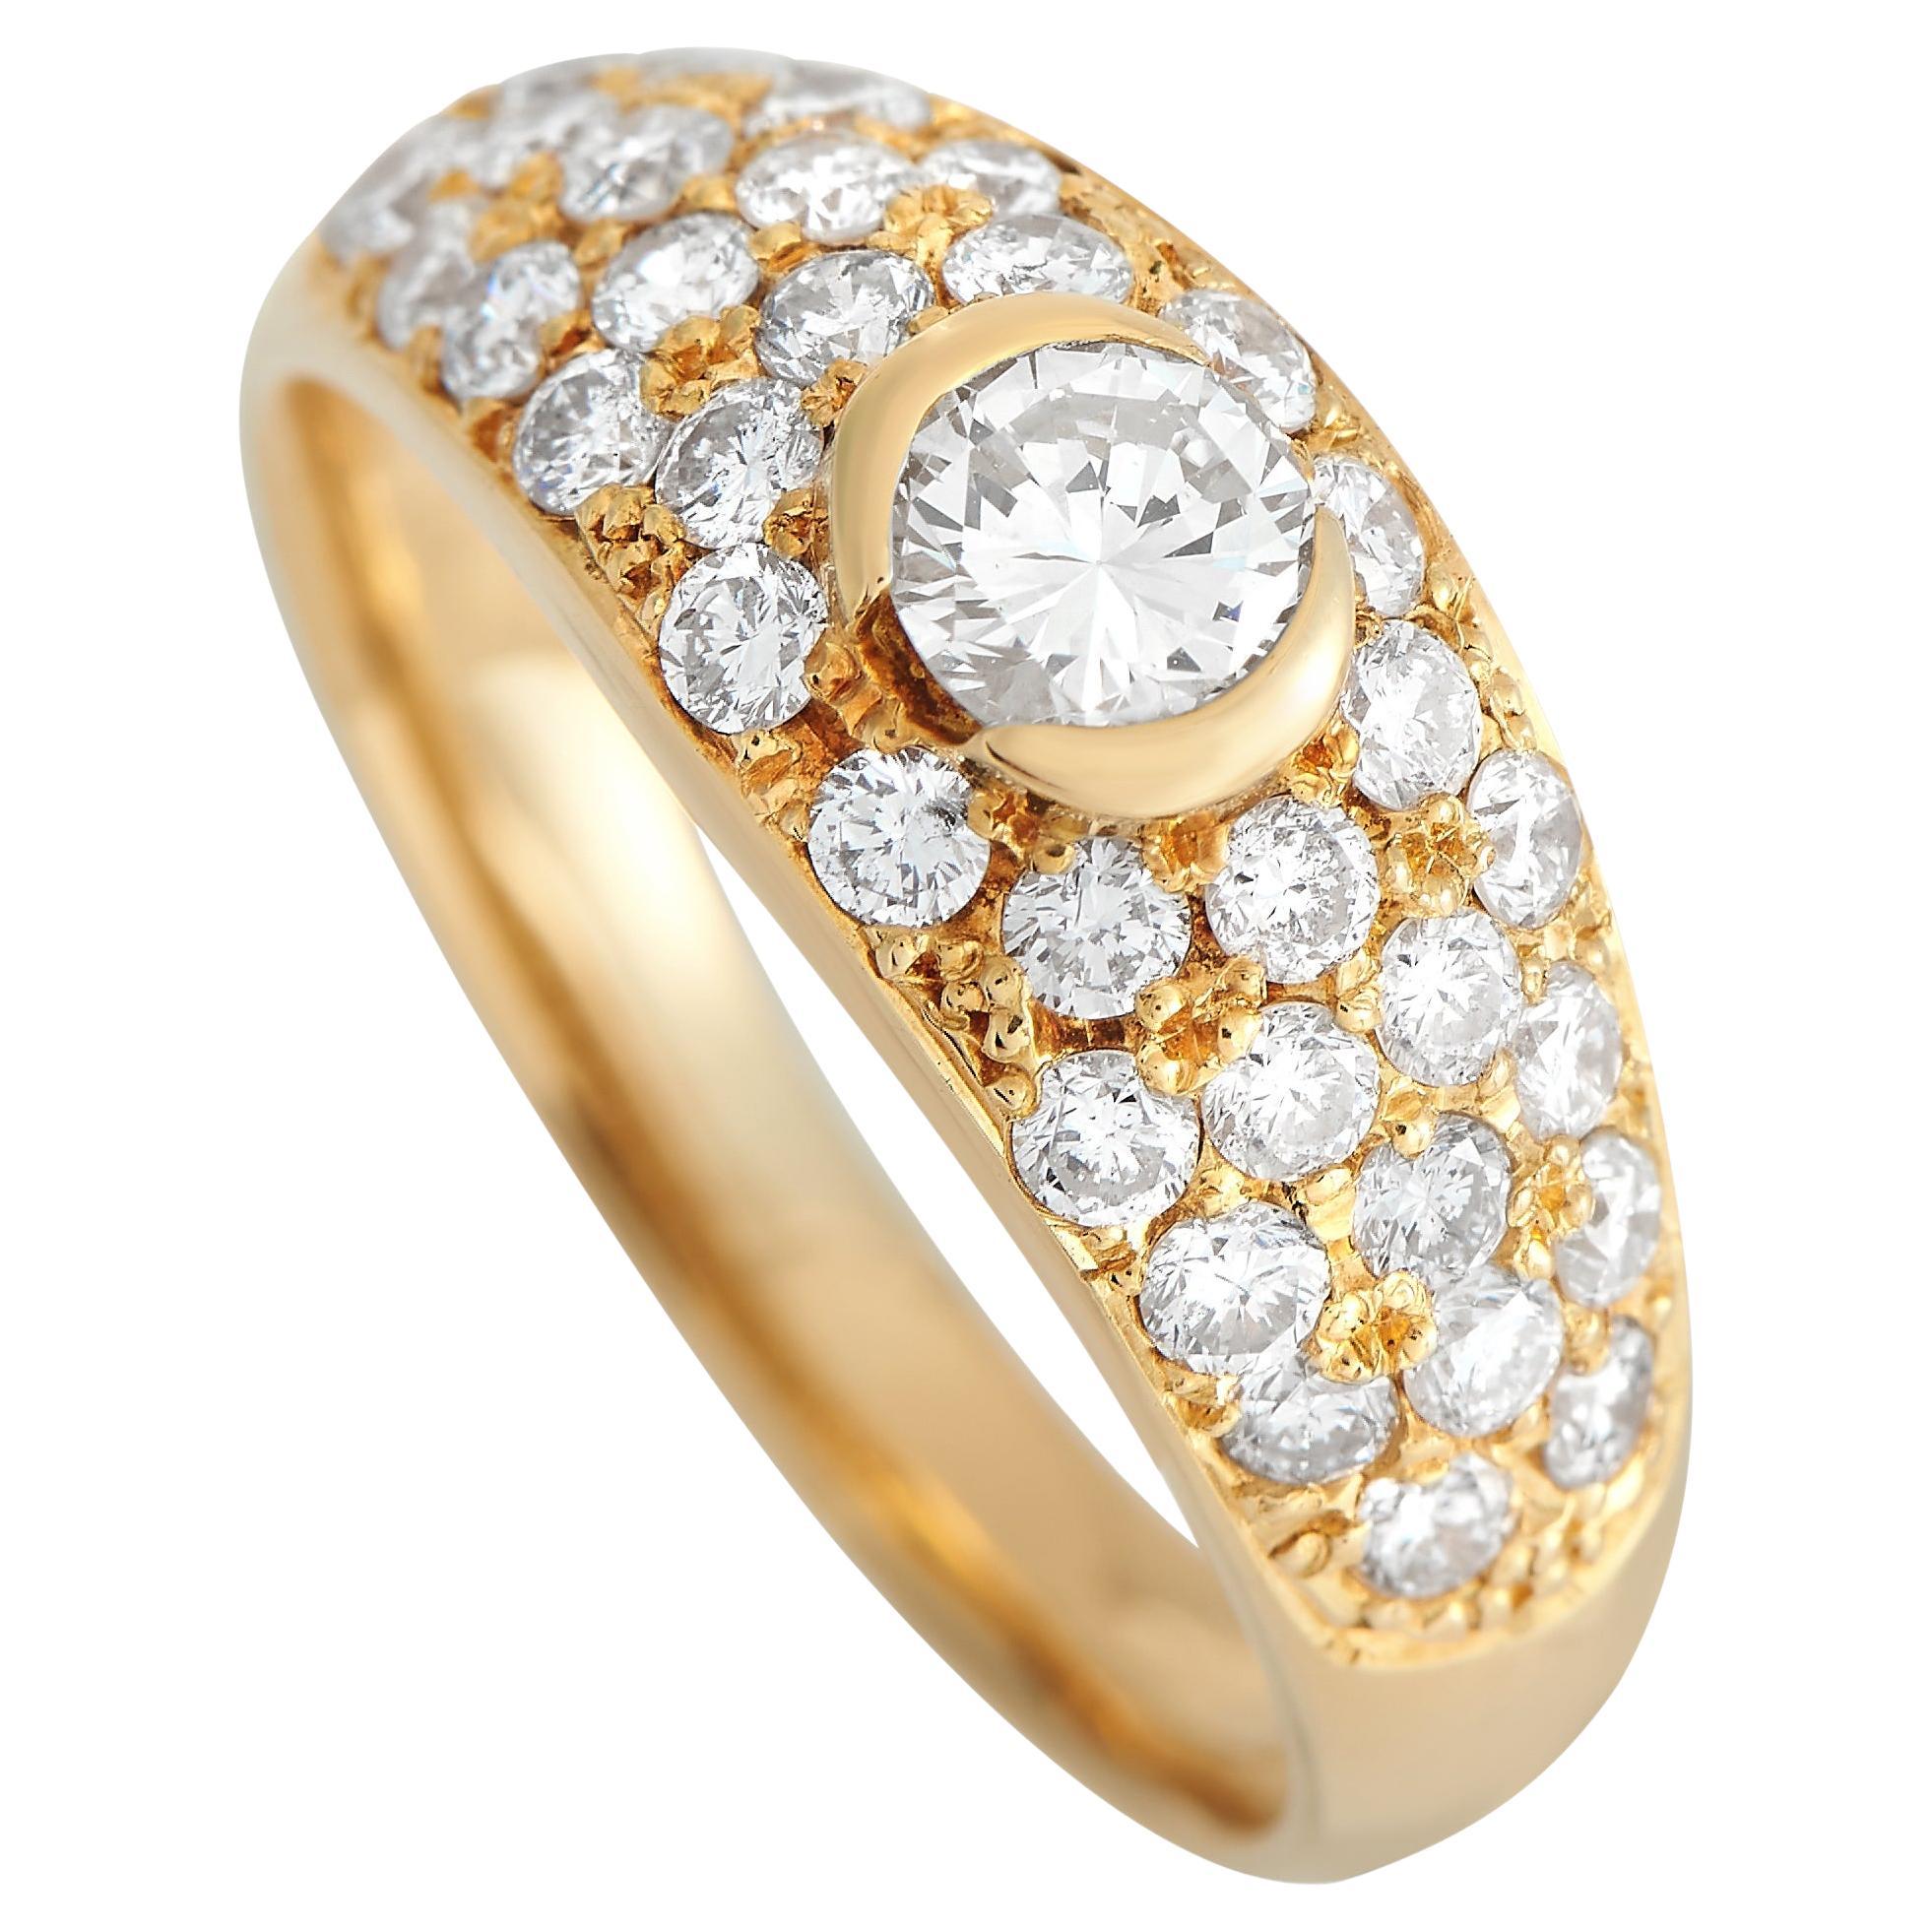 LB Exclusive 18K Yellow Gold 1.25ct Diamond Ring MF22-100523